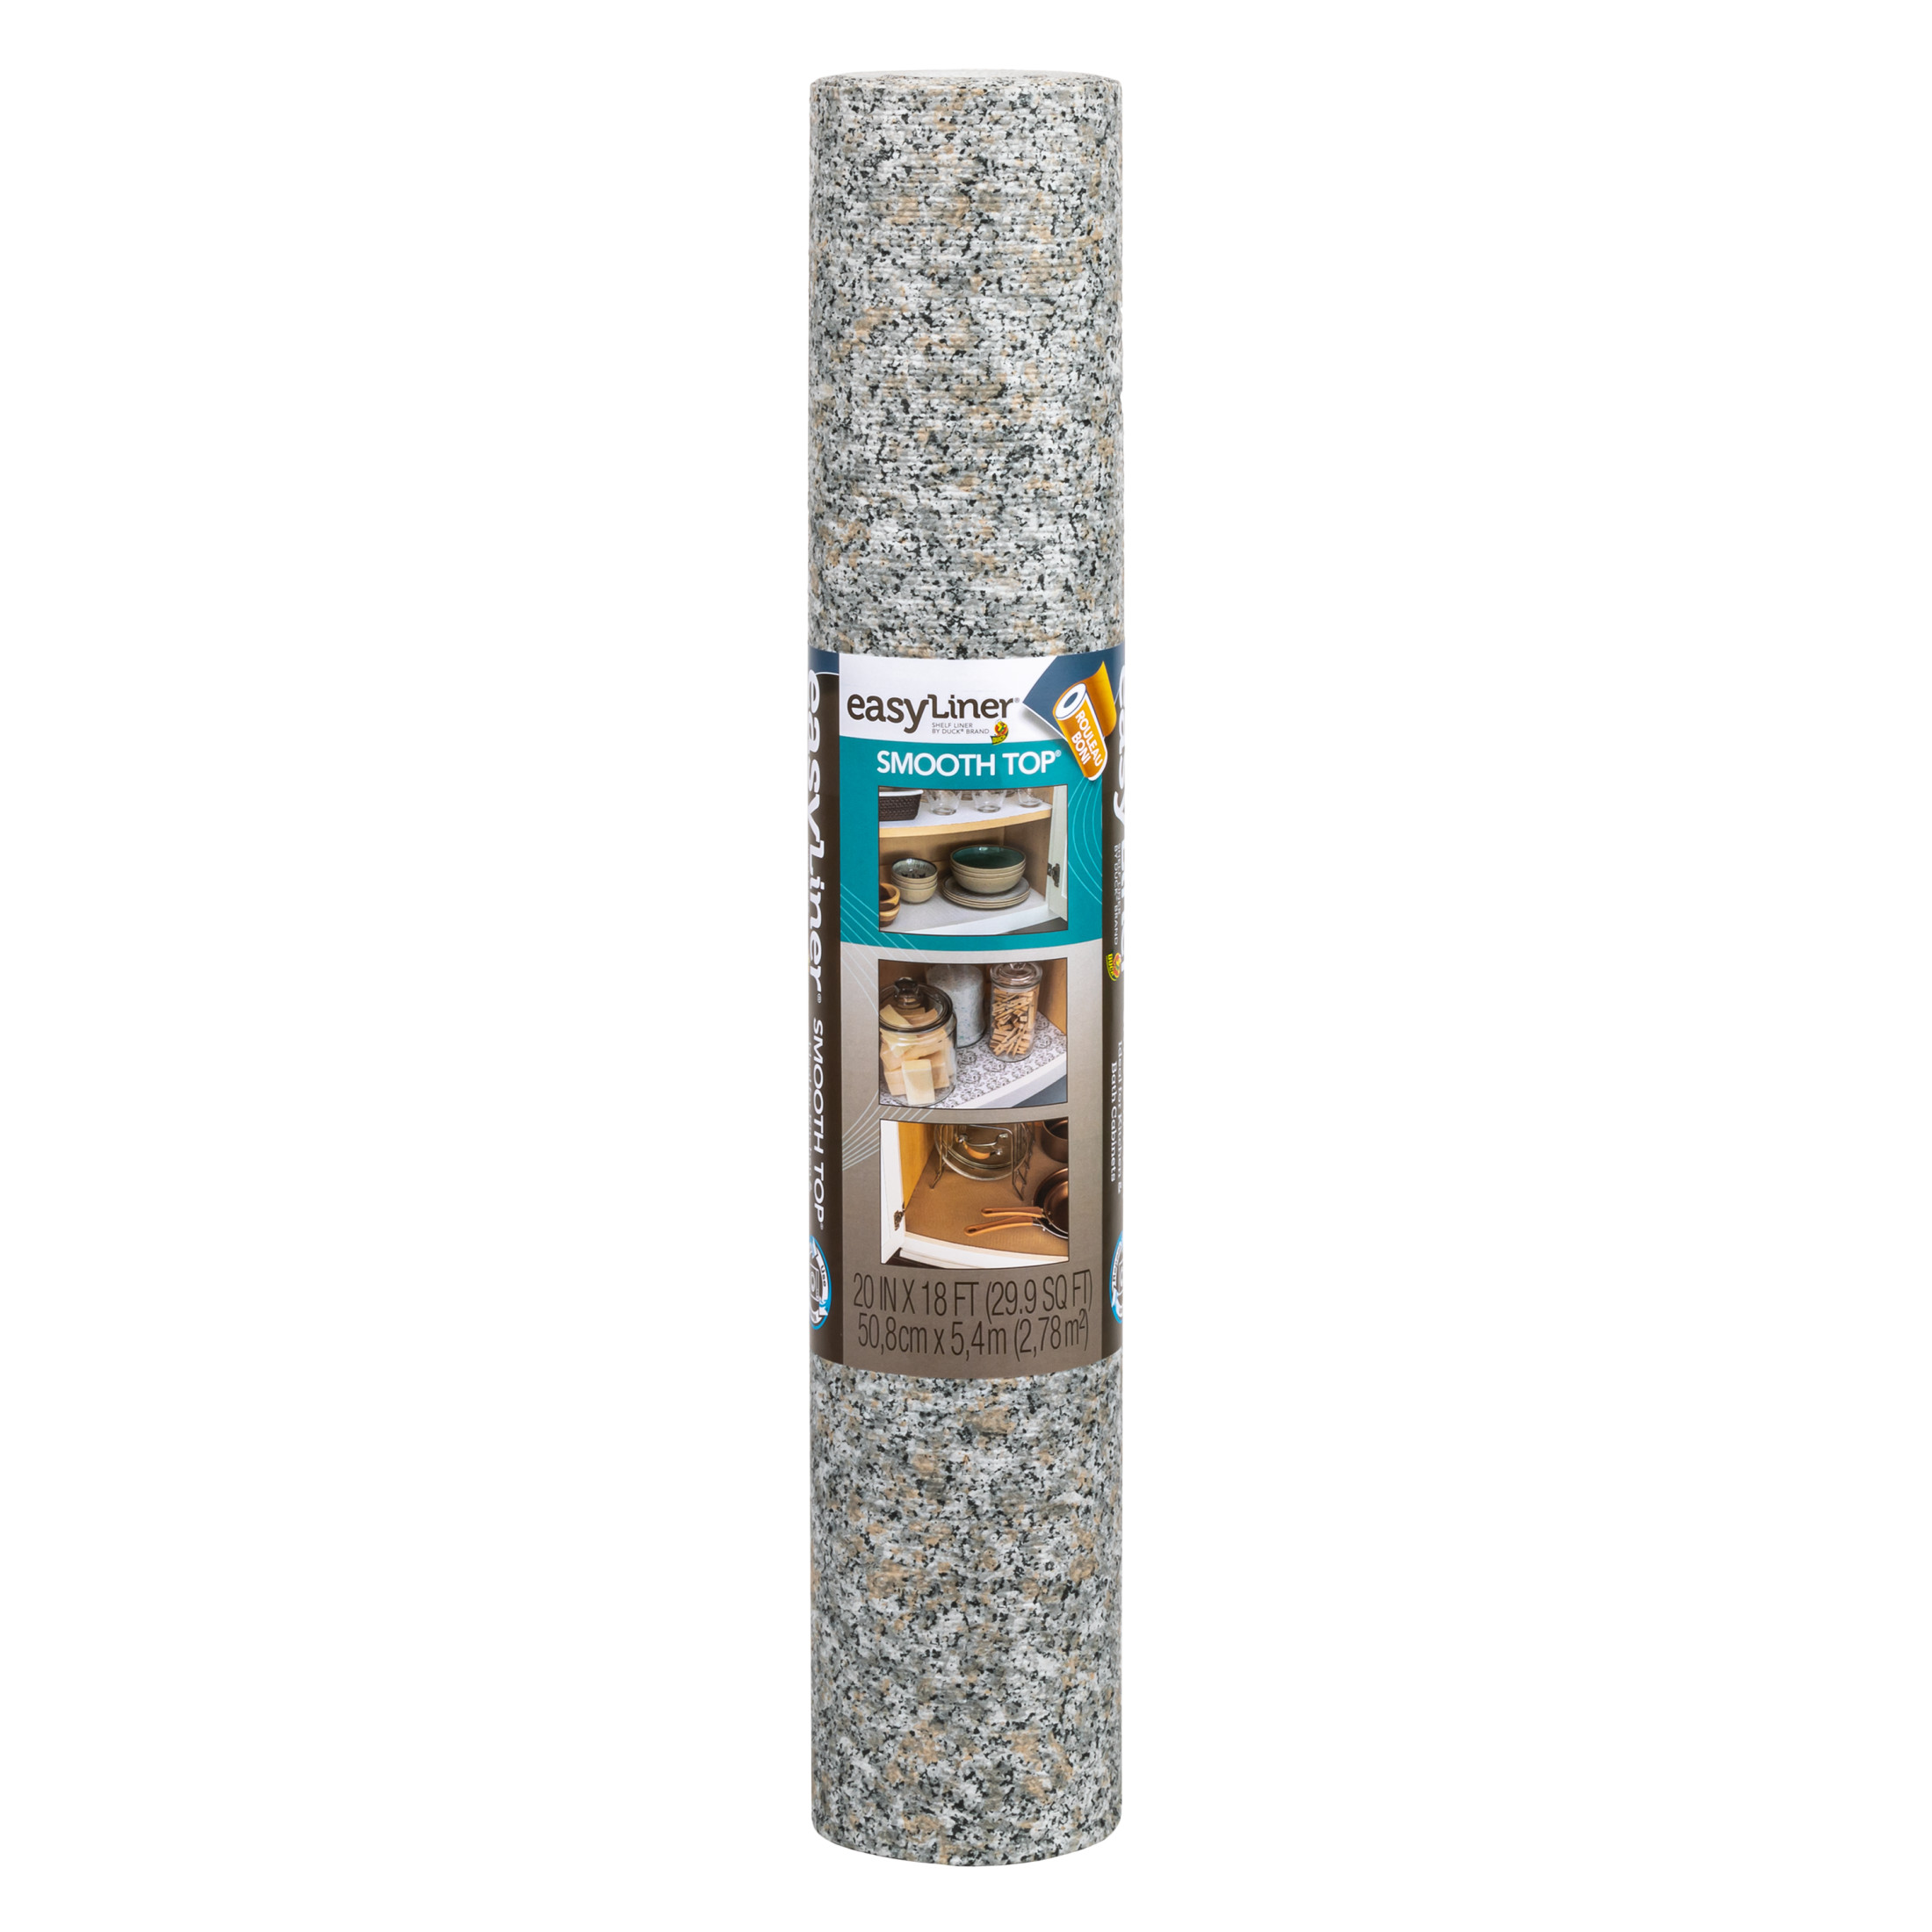 EasyLiner Smooth Top Shelf Liner, Grey Granite, 20 in. x 18 ft. Roll - image 4 of 11